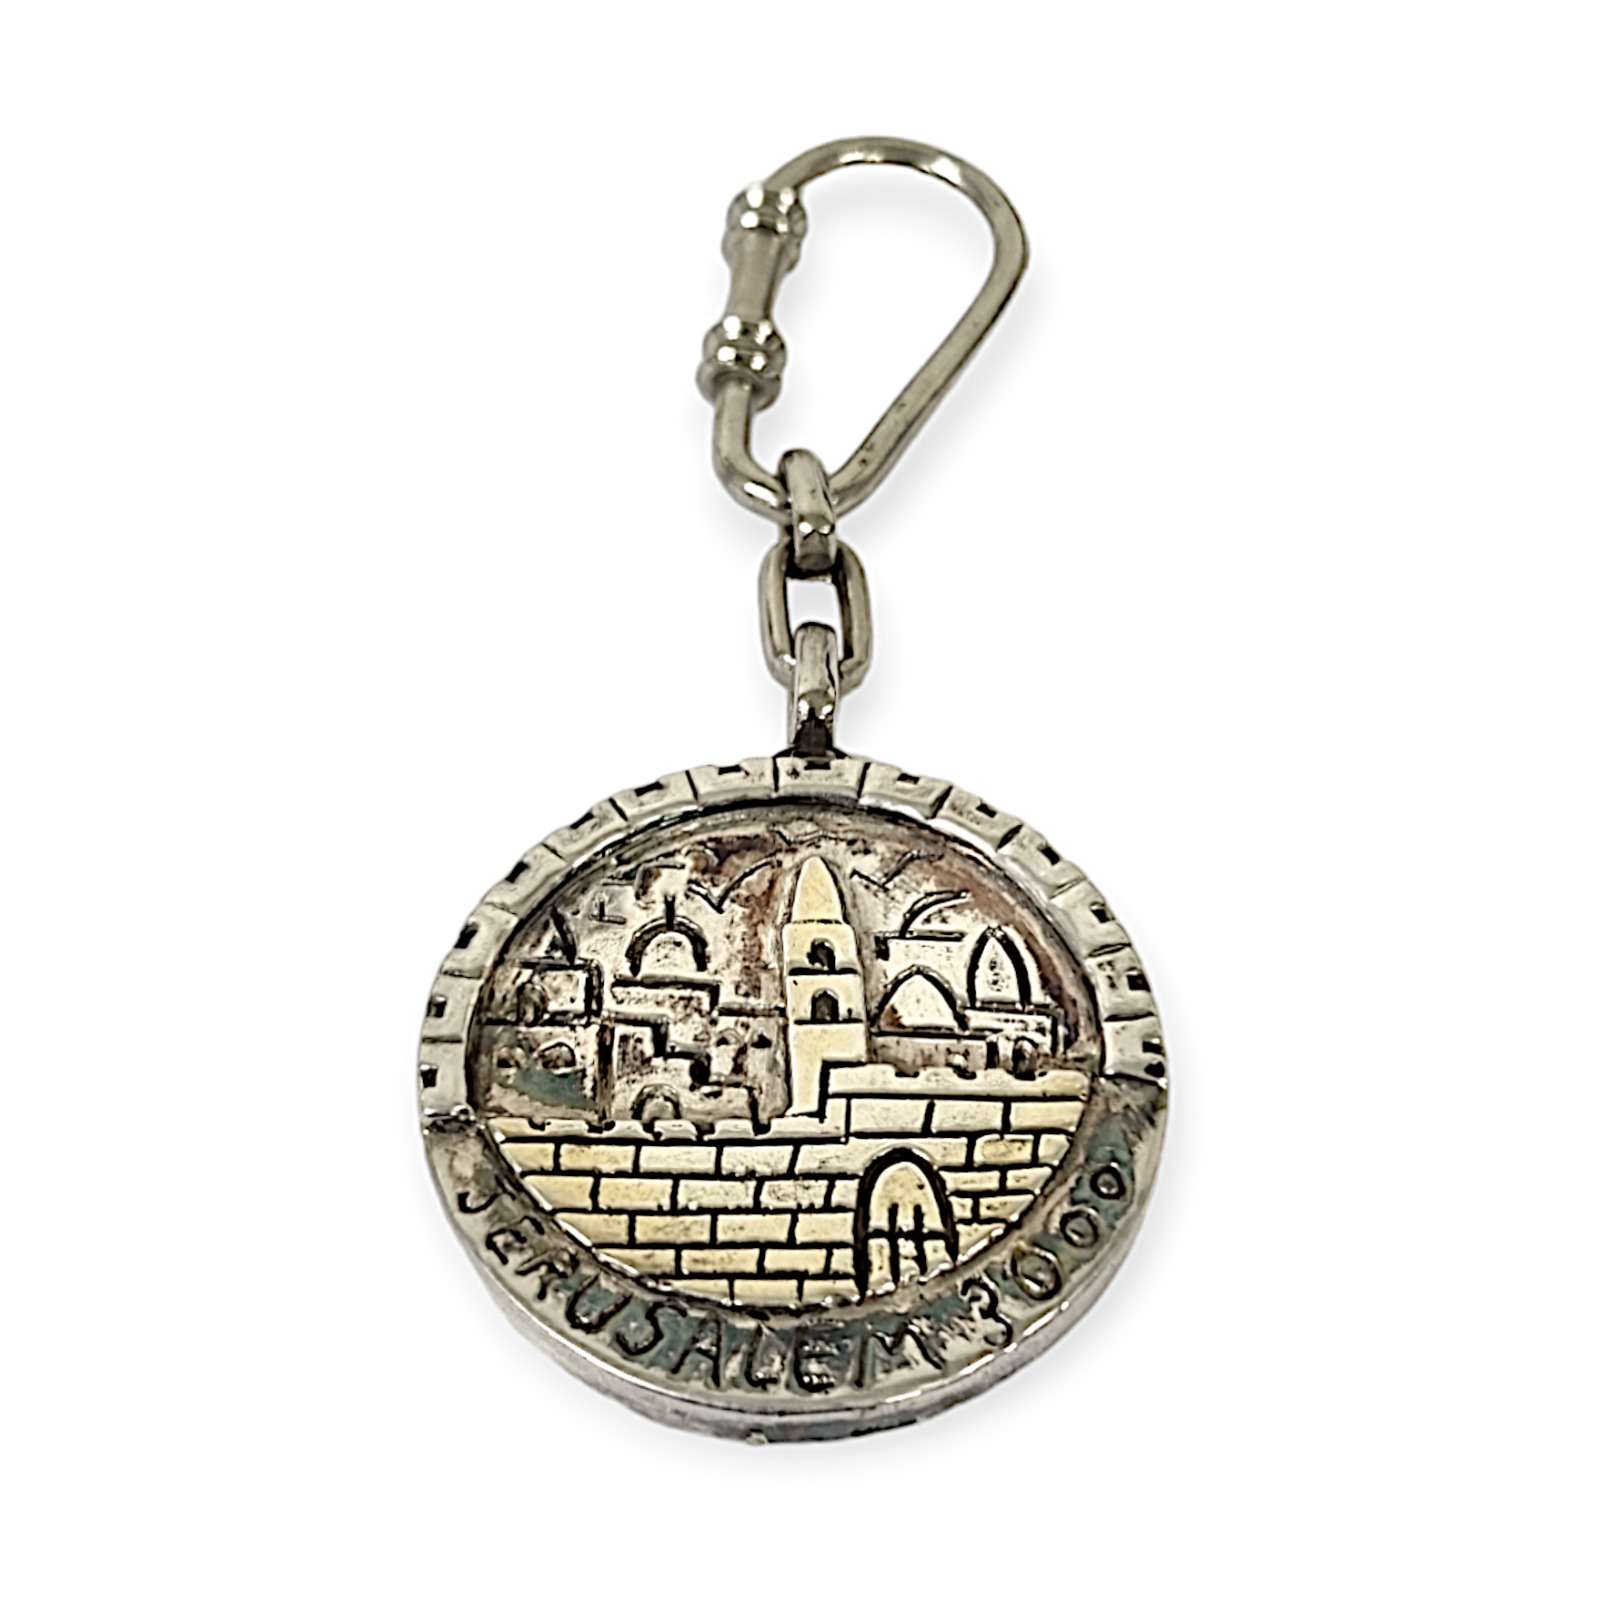 Jerusalem 3000 Key Chain Sterling Silver 925 Jewish Amulet Talisman Judaica 1995